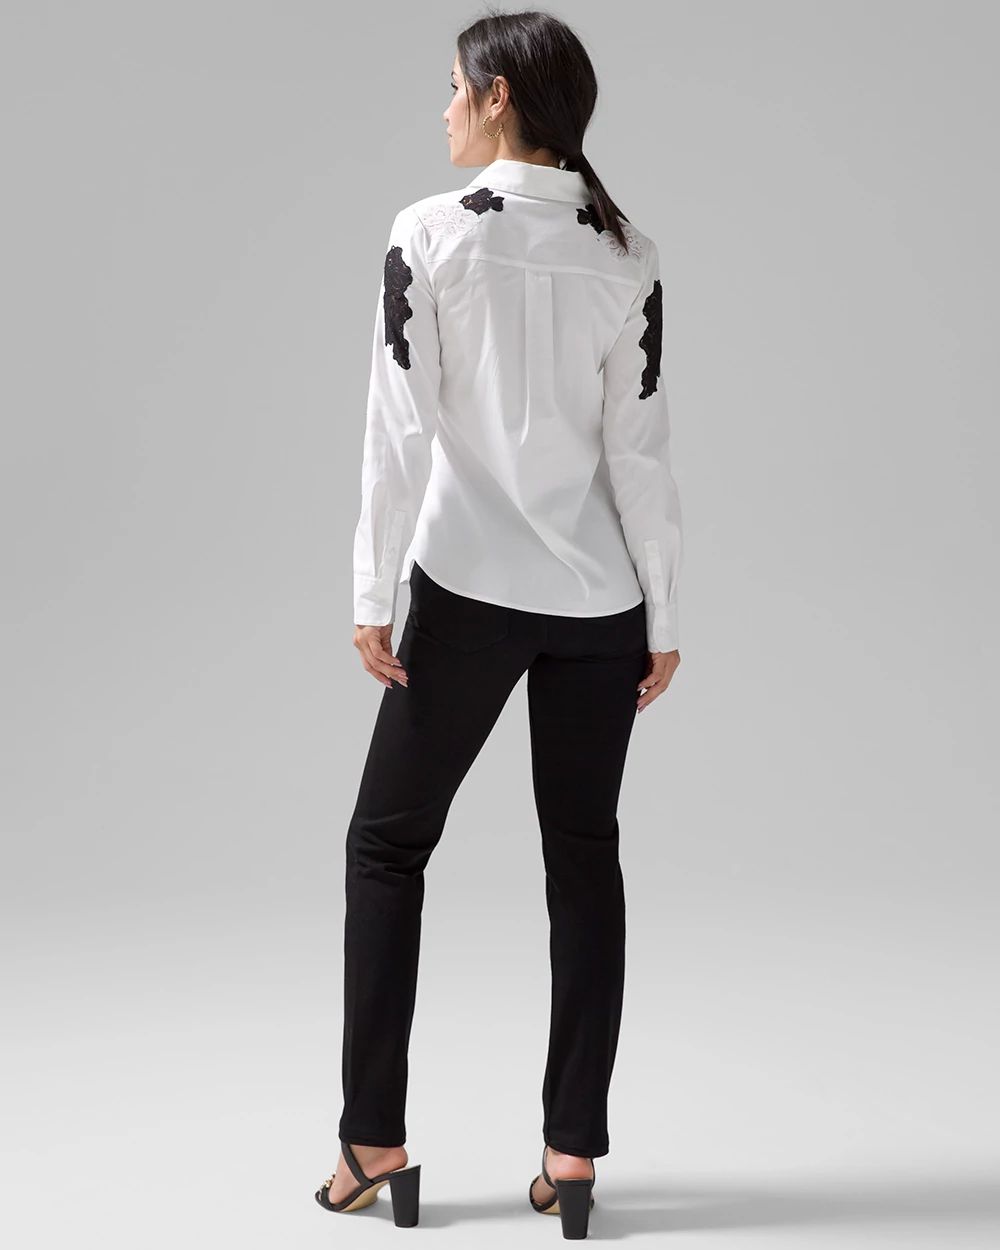 Lace Applique Shirt click to view larger image.